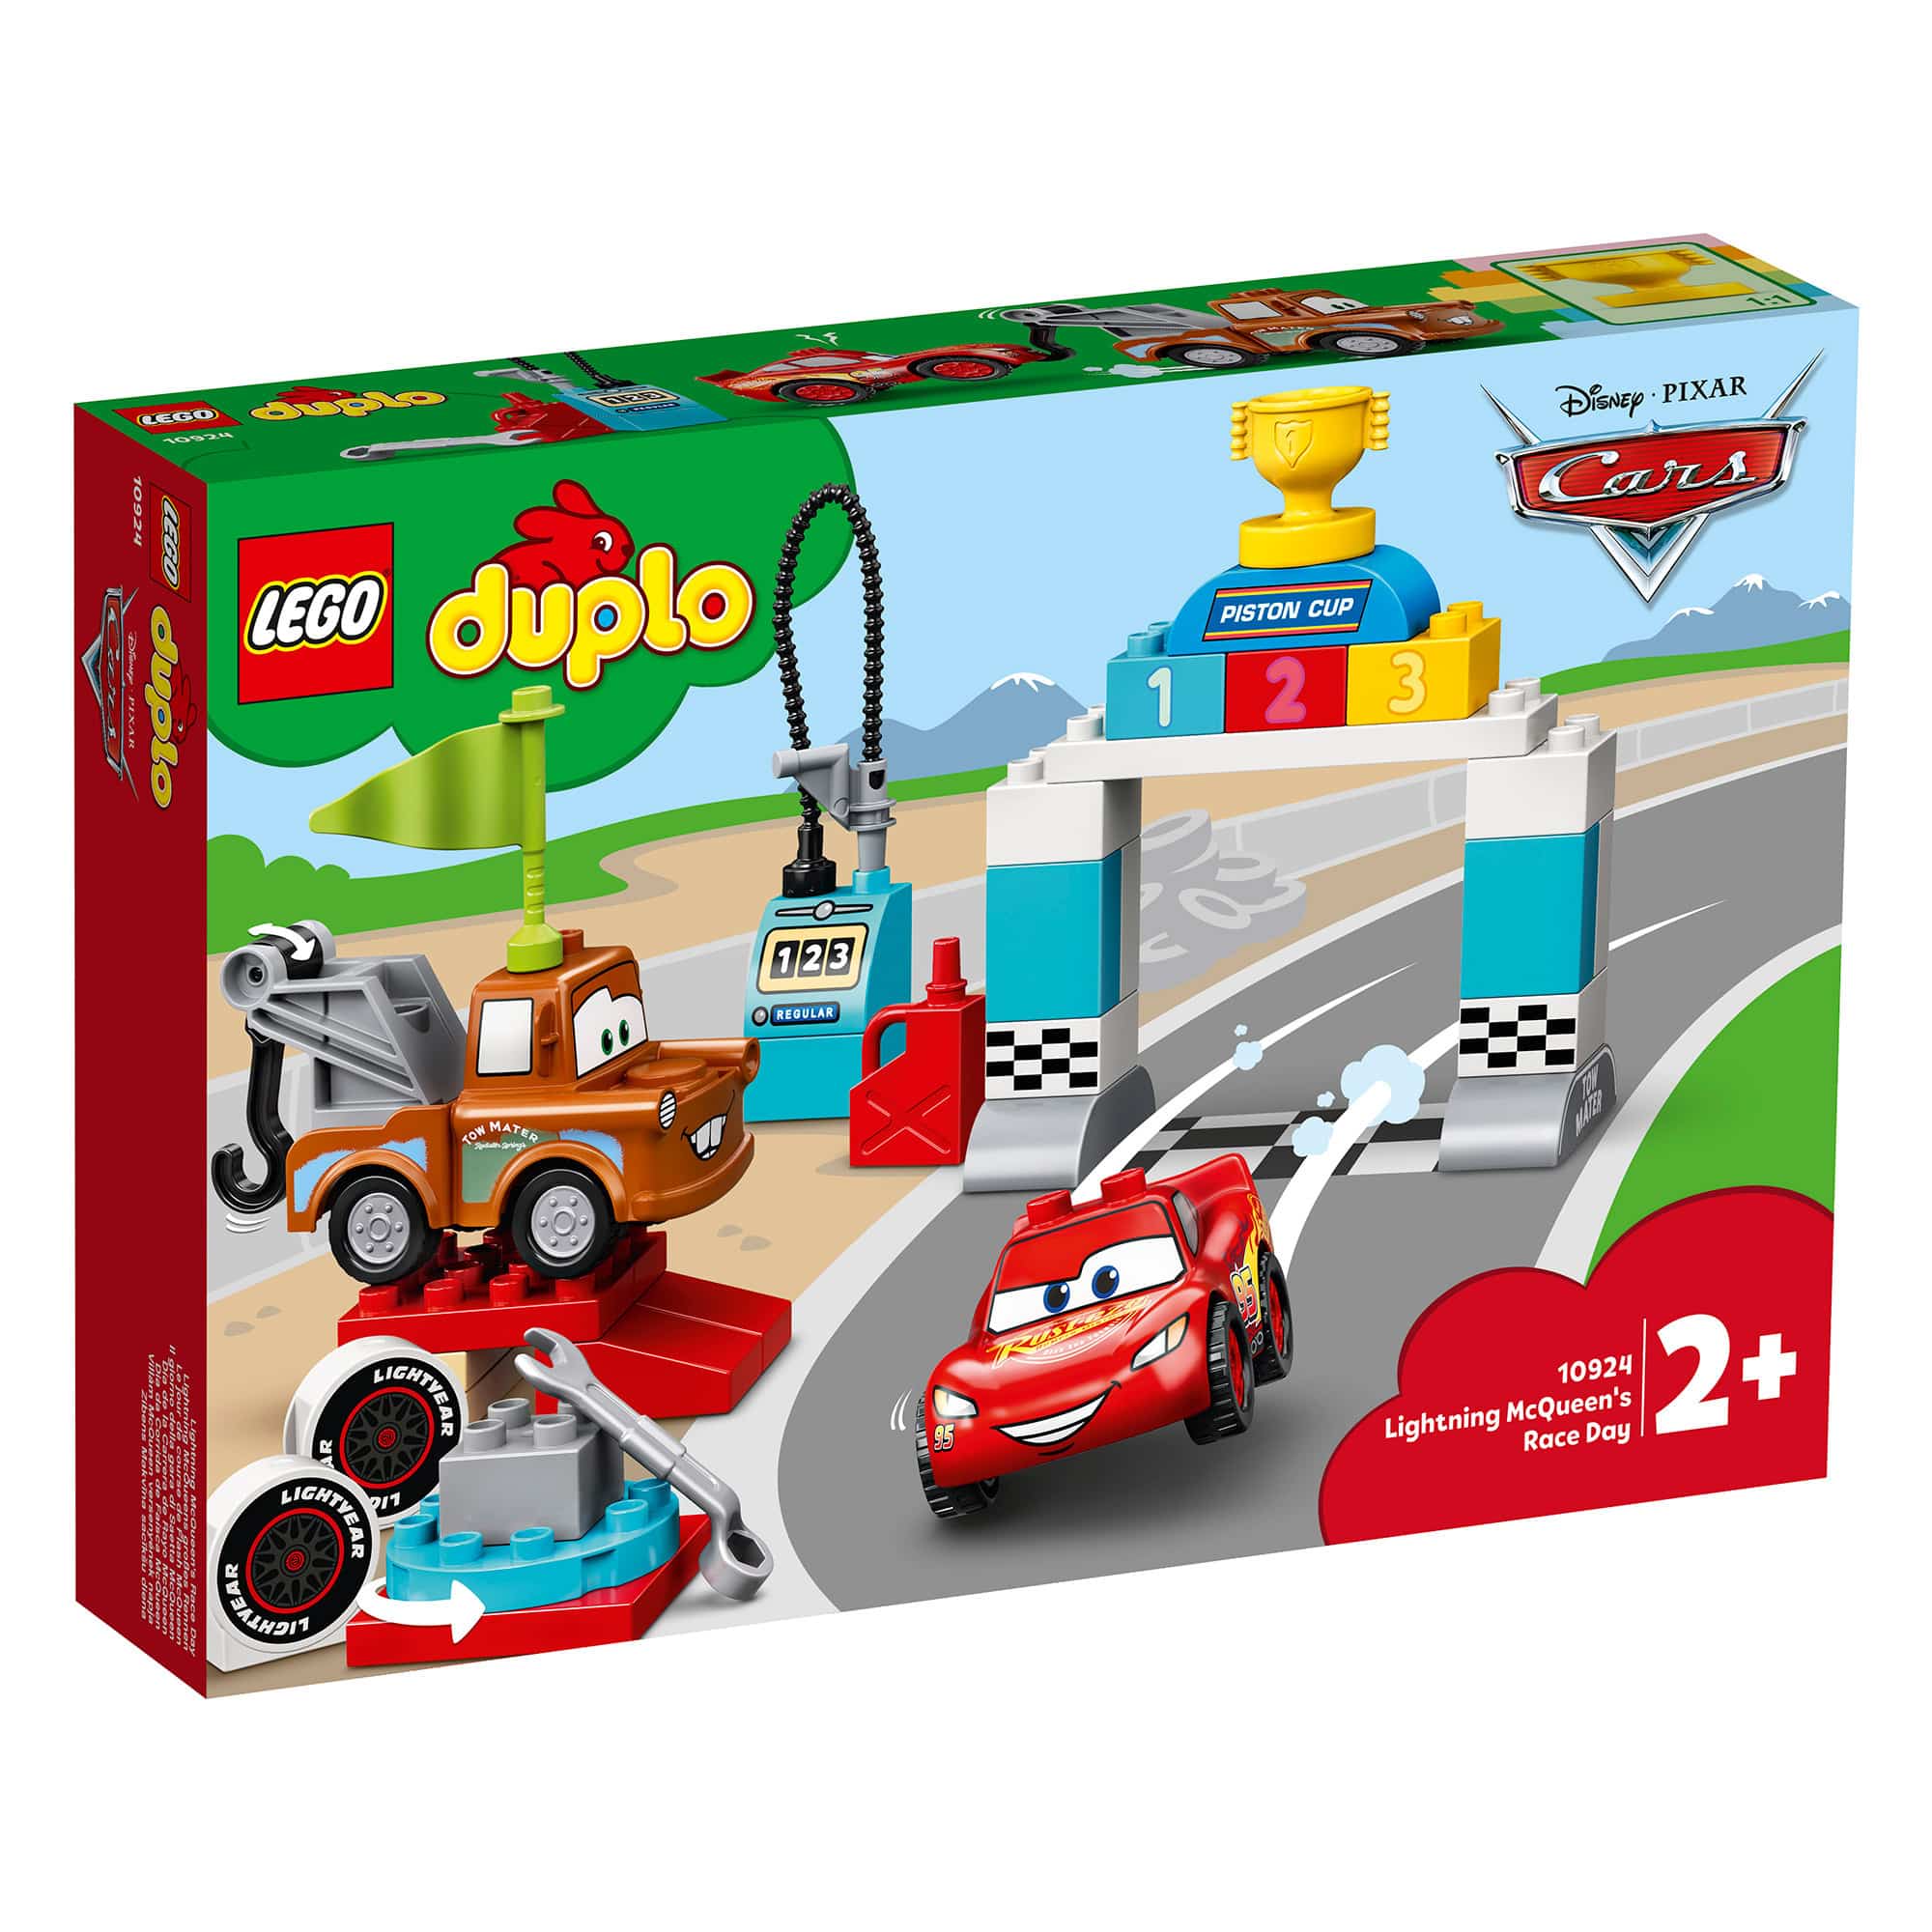 LEGO DUPLO 10924 - Lightning McQueen's Race Day